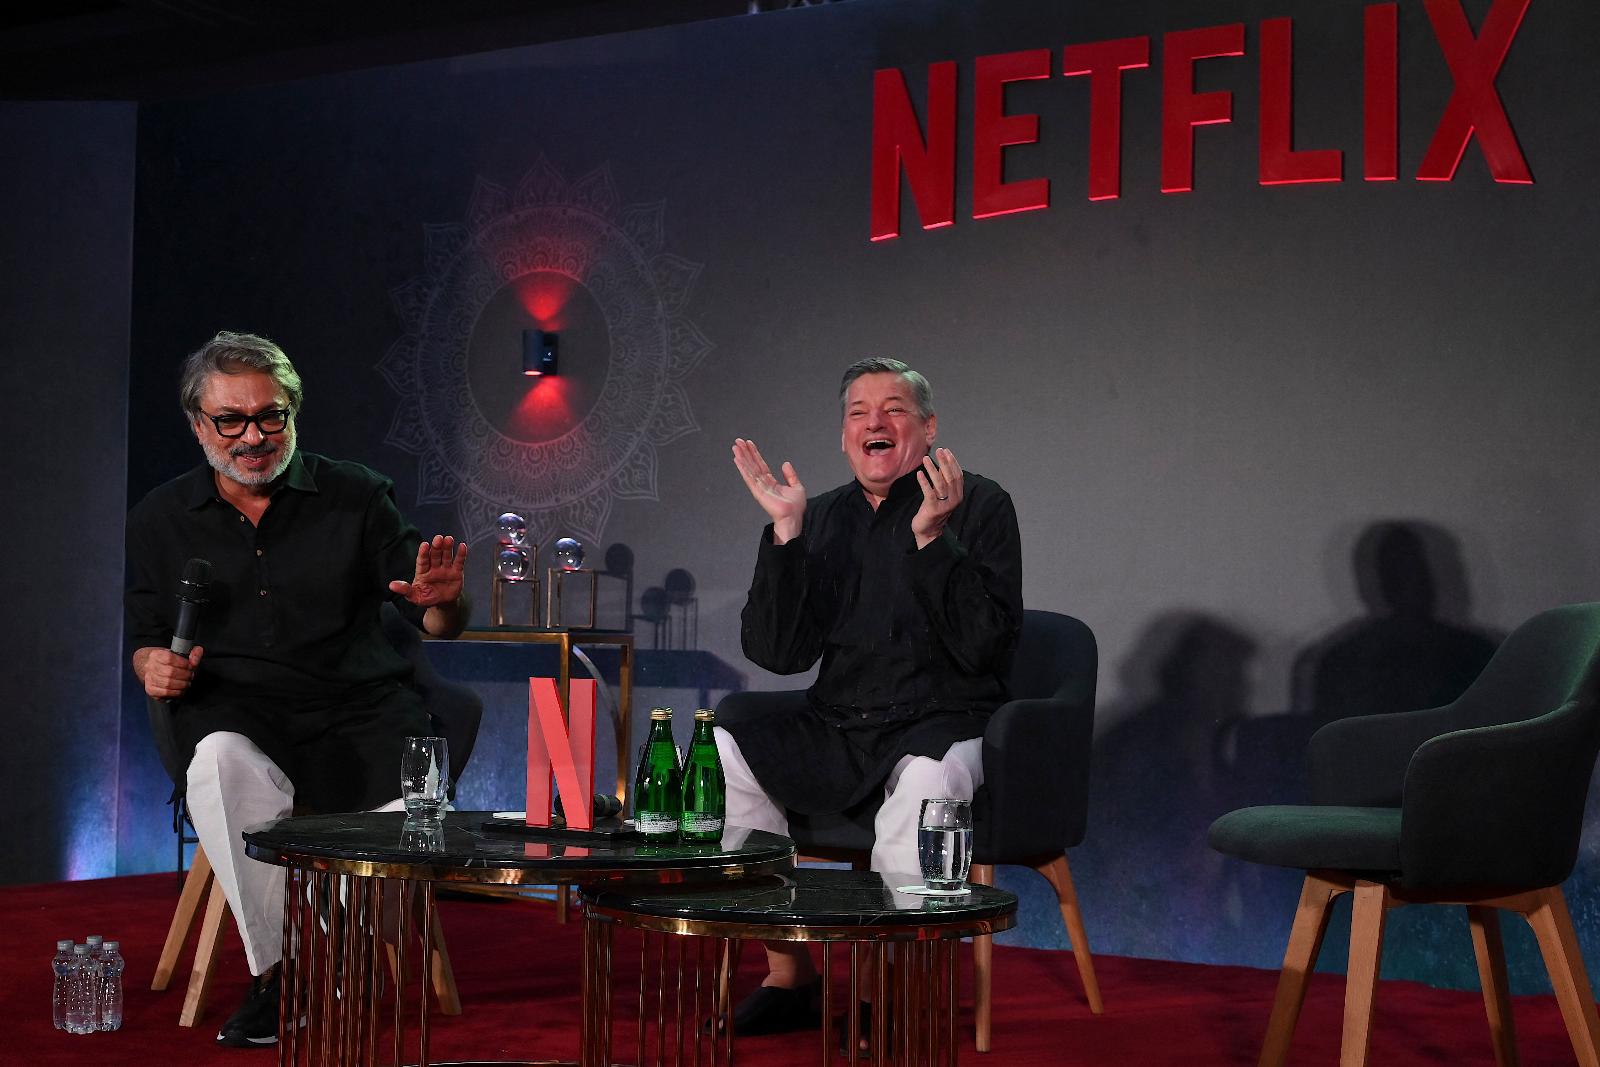 Netflix inks deal with Ambani’s Jio to expand India presence